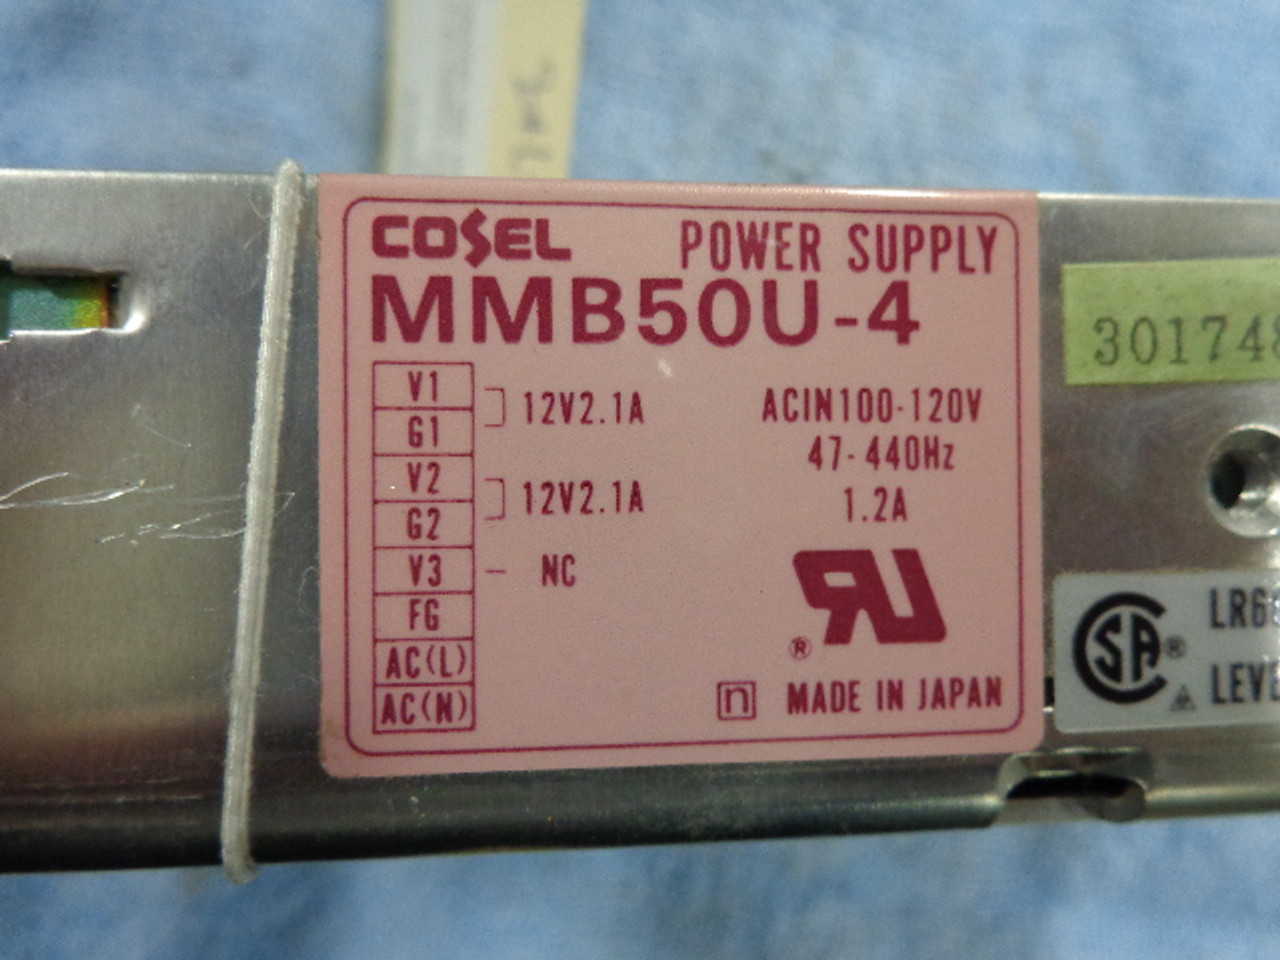 Cosel MMB50U-4 Power Supply 12 V 2.1 A, 12 V 2.1 A, Input 100-102VAC 1.2 A1